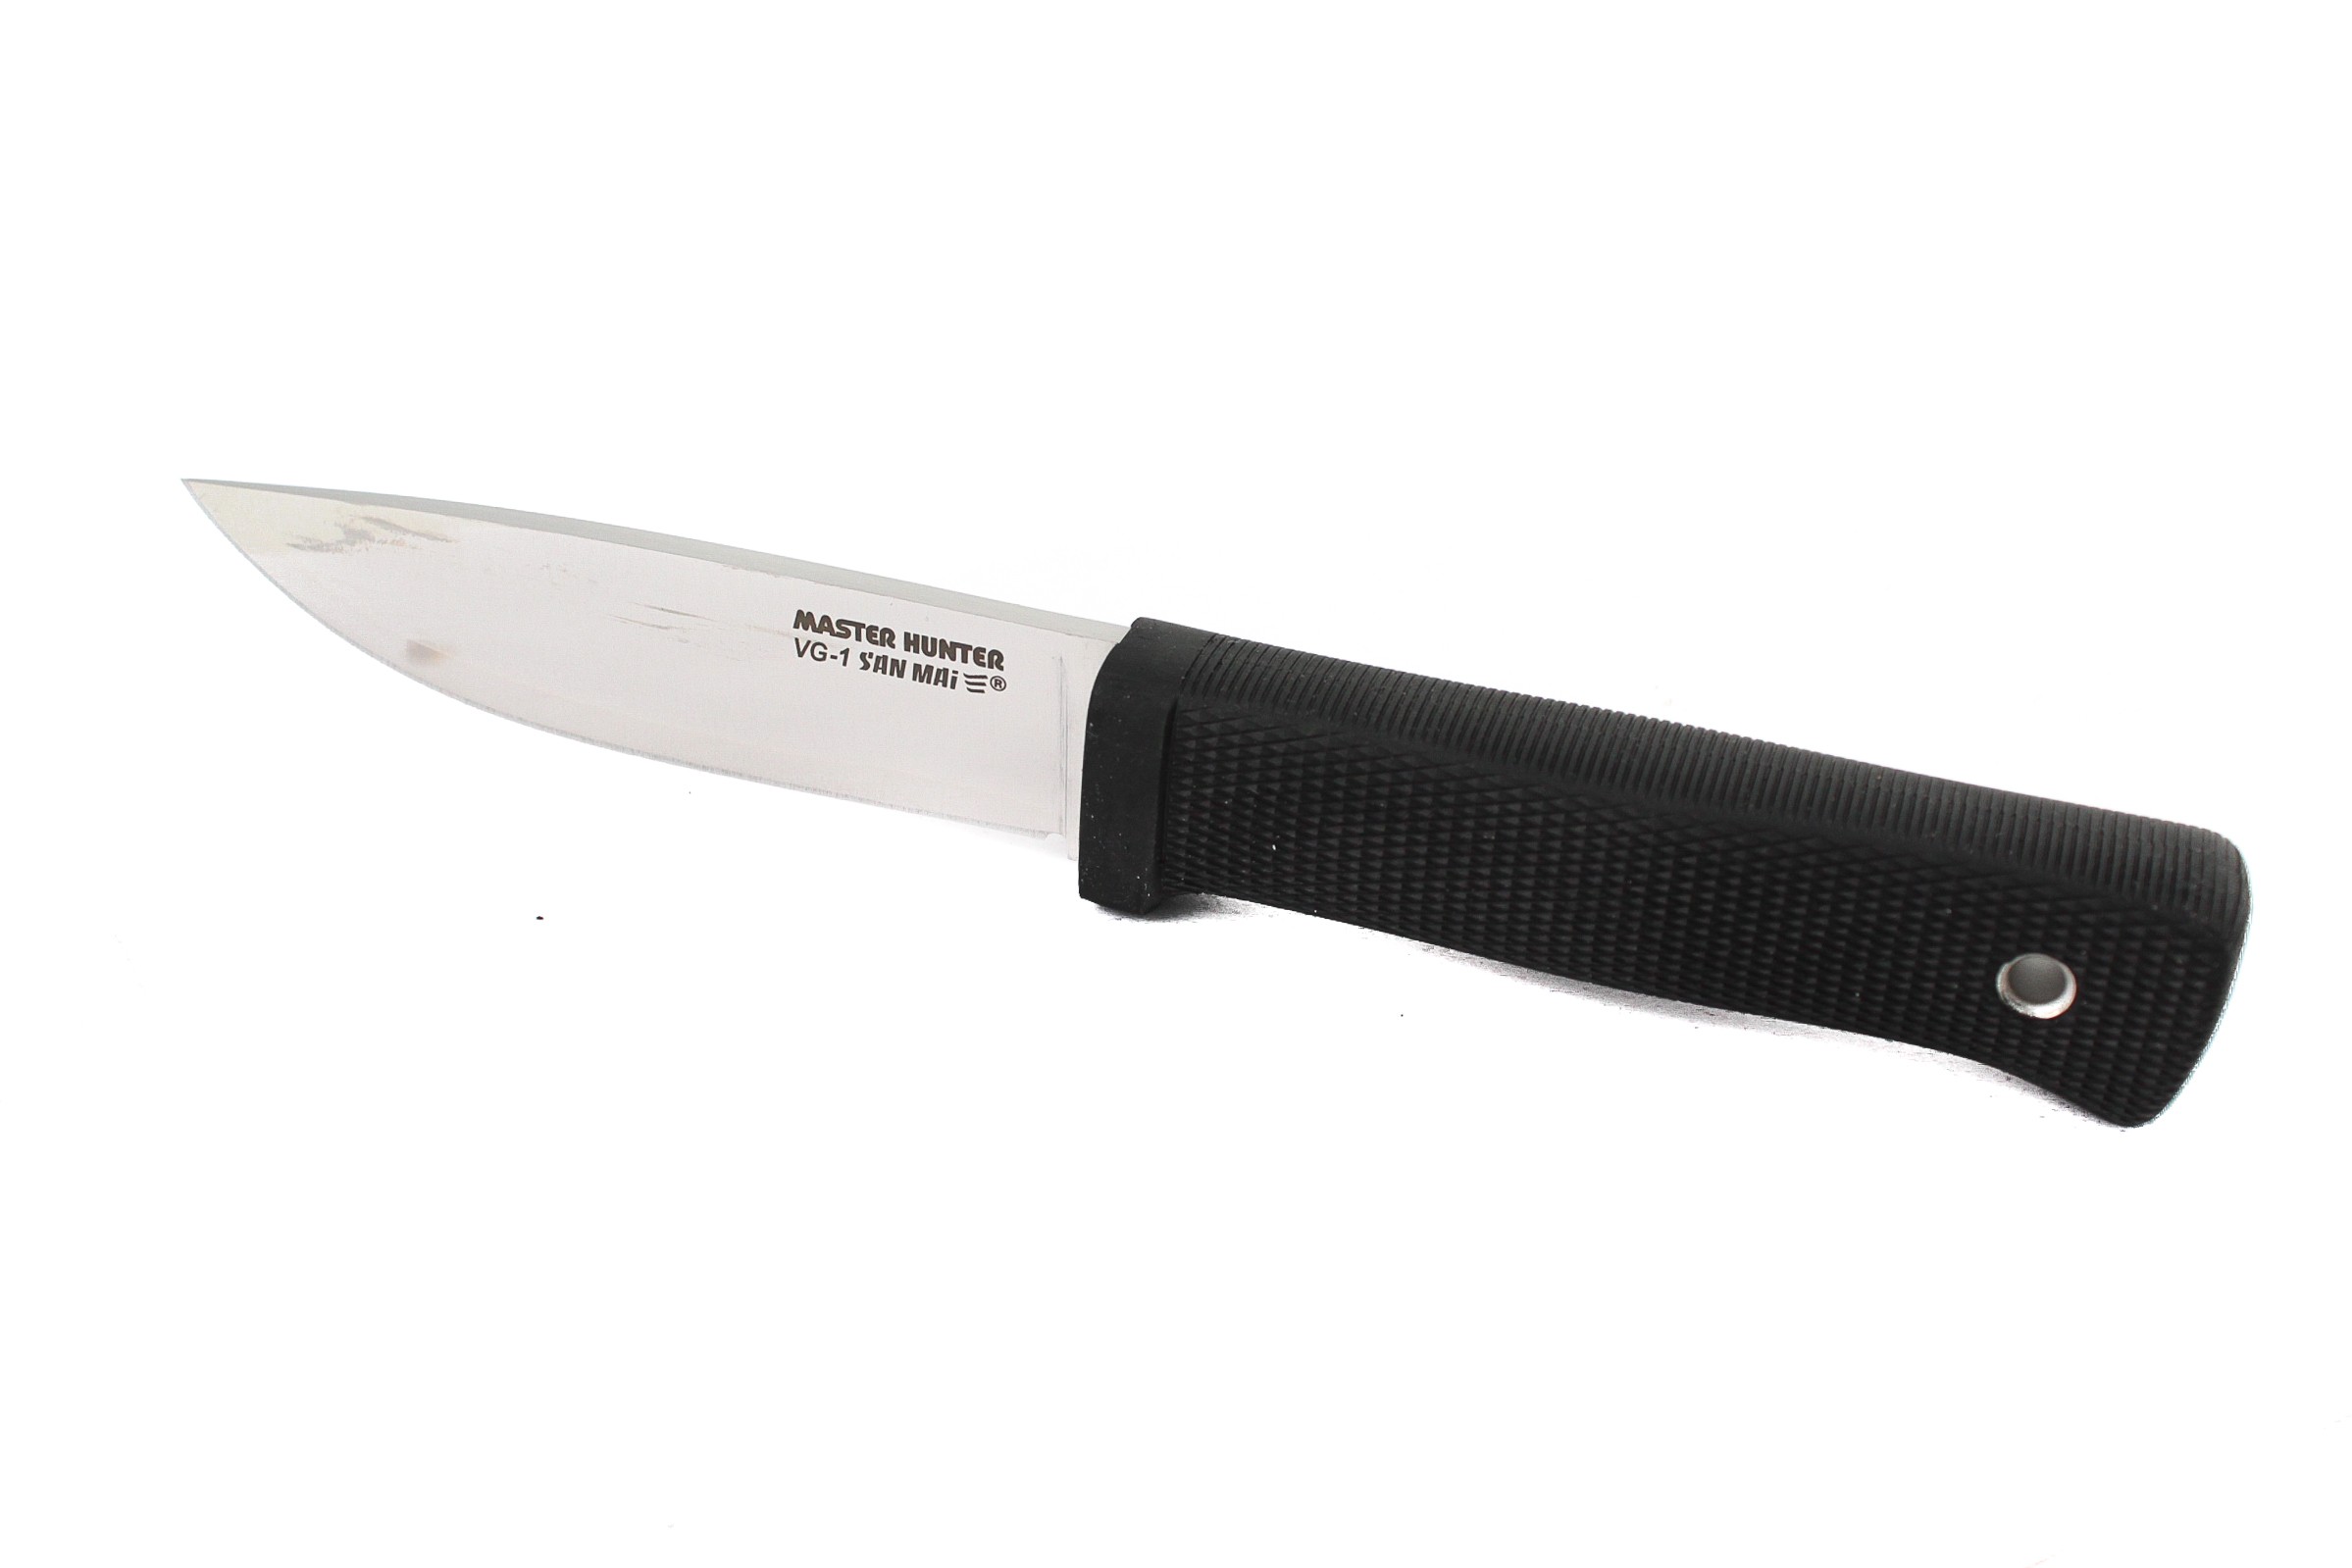 Нож Cold Steel Master Hunter фиксированный клинок 11,5см VG-1 San mai lll